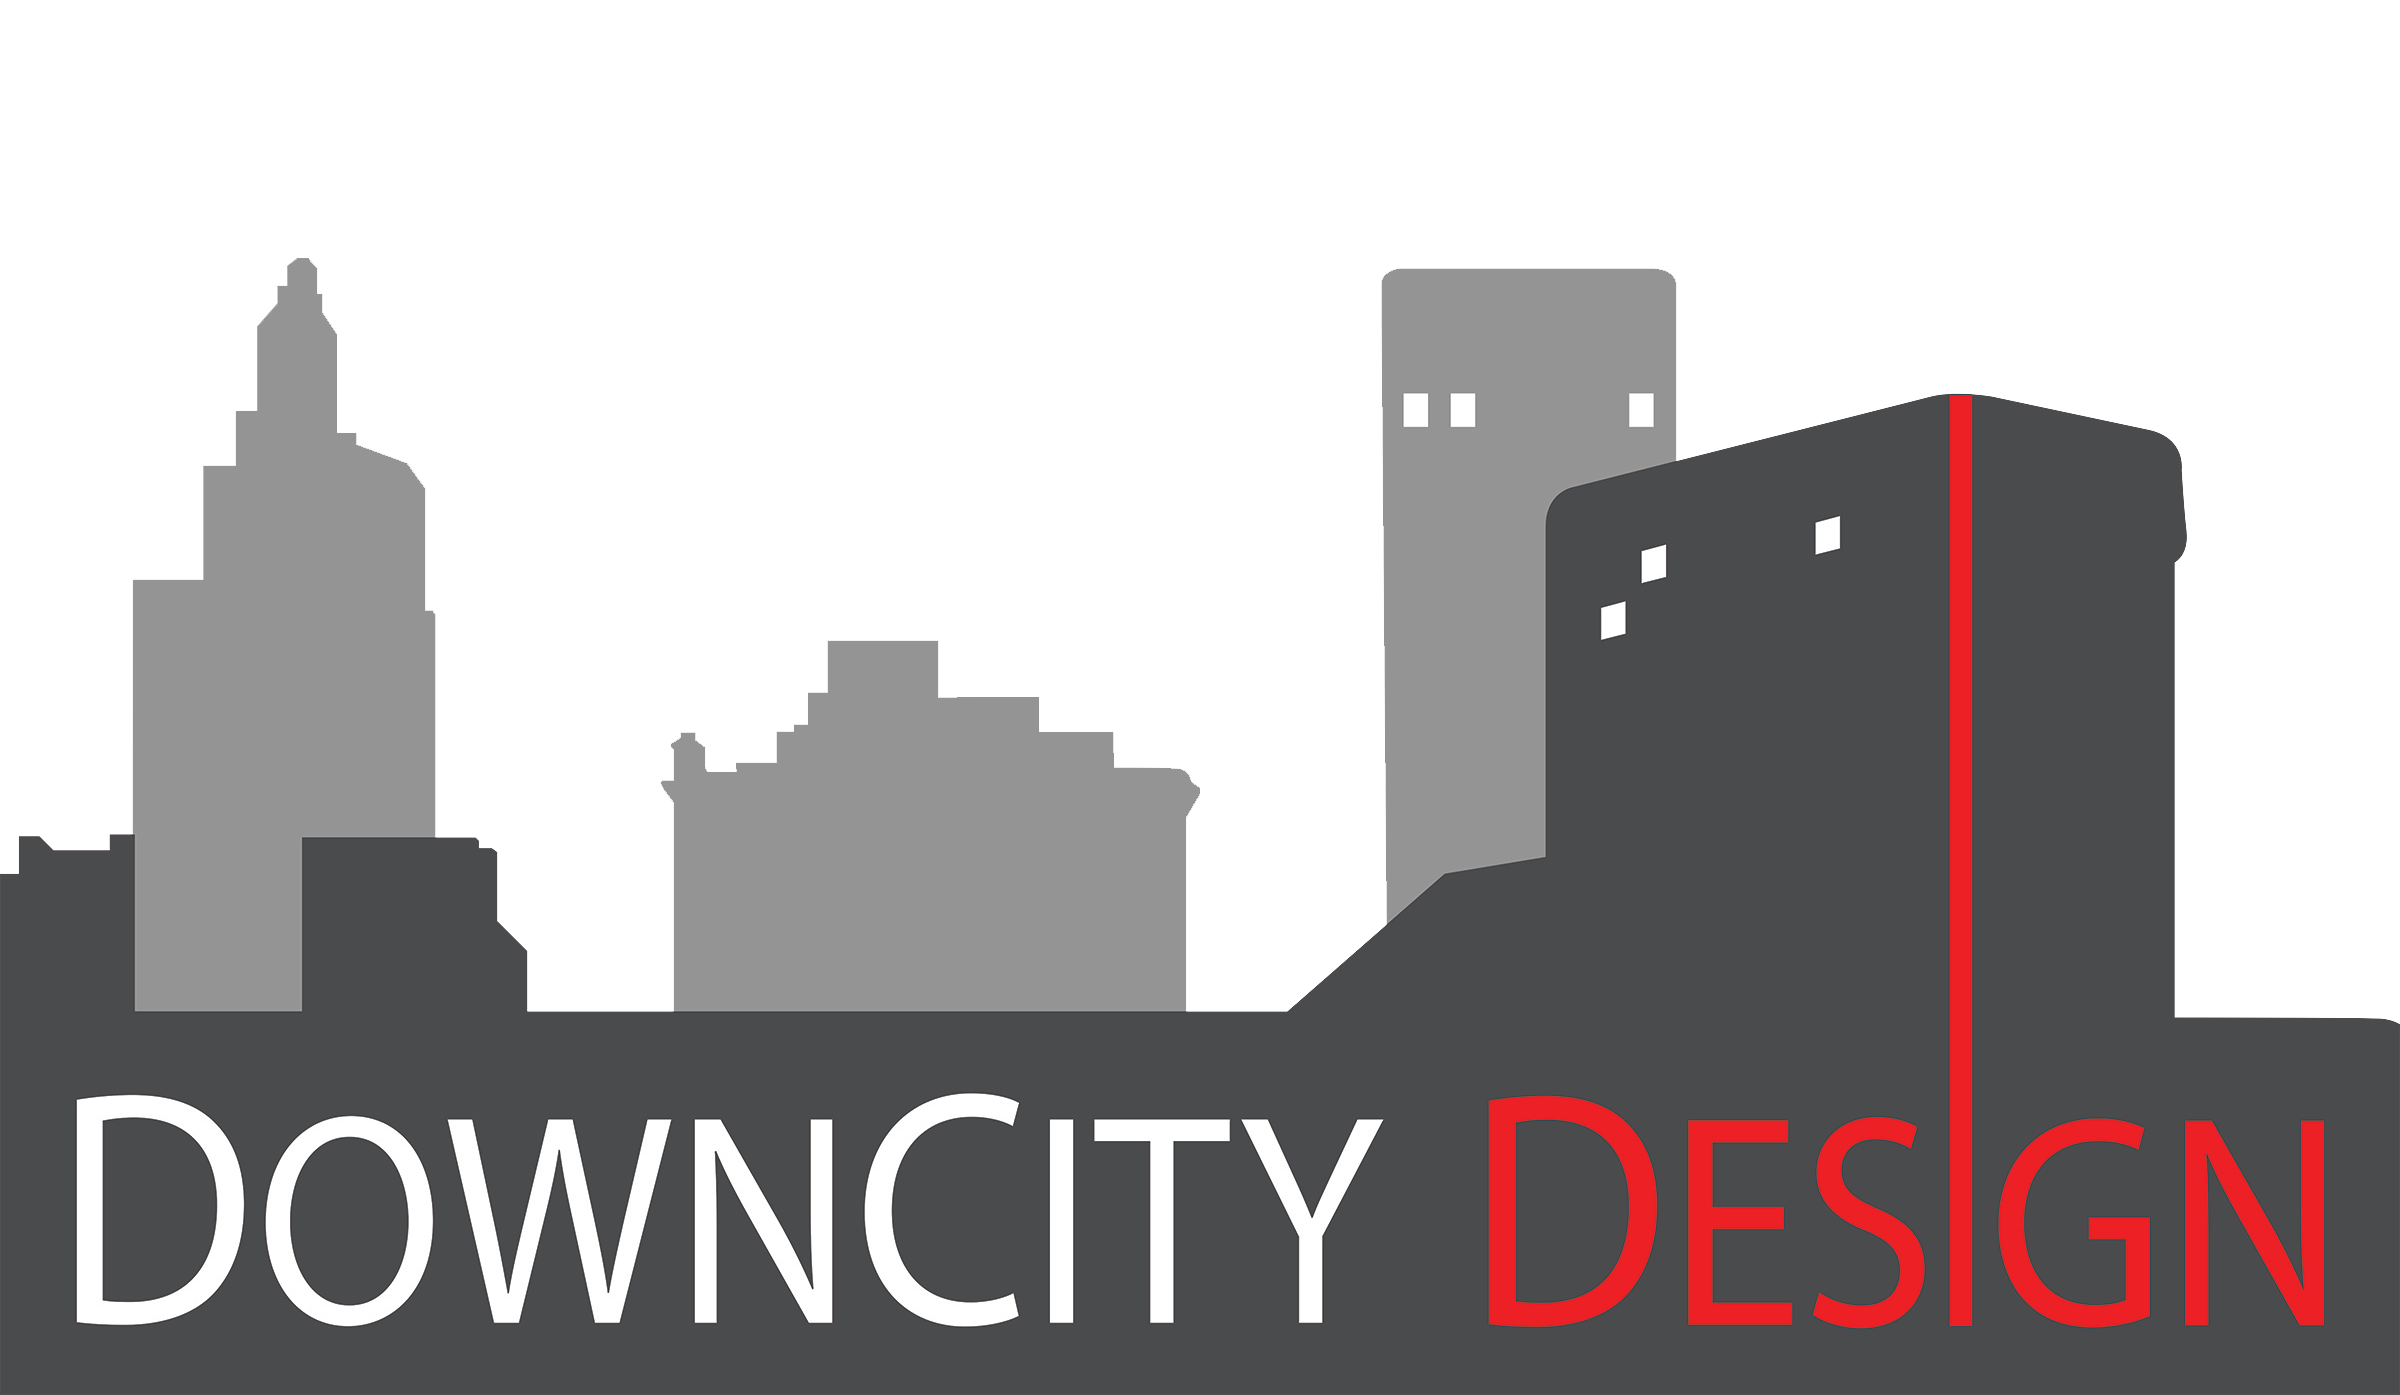    DownCity Design